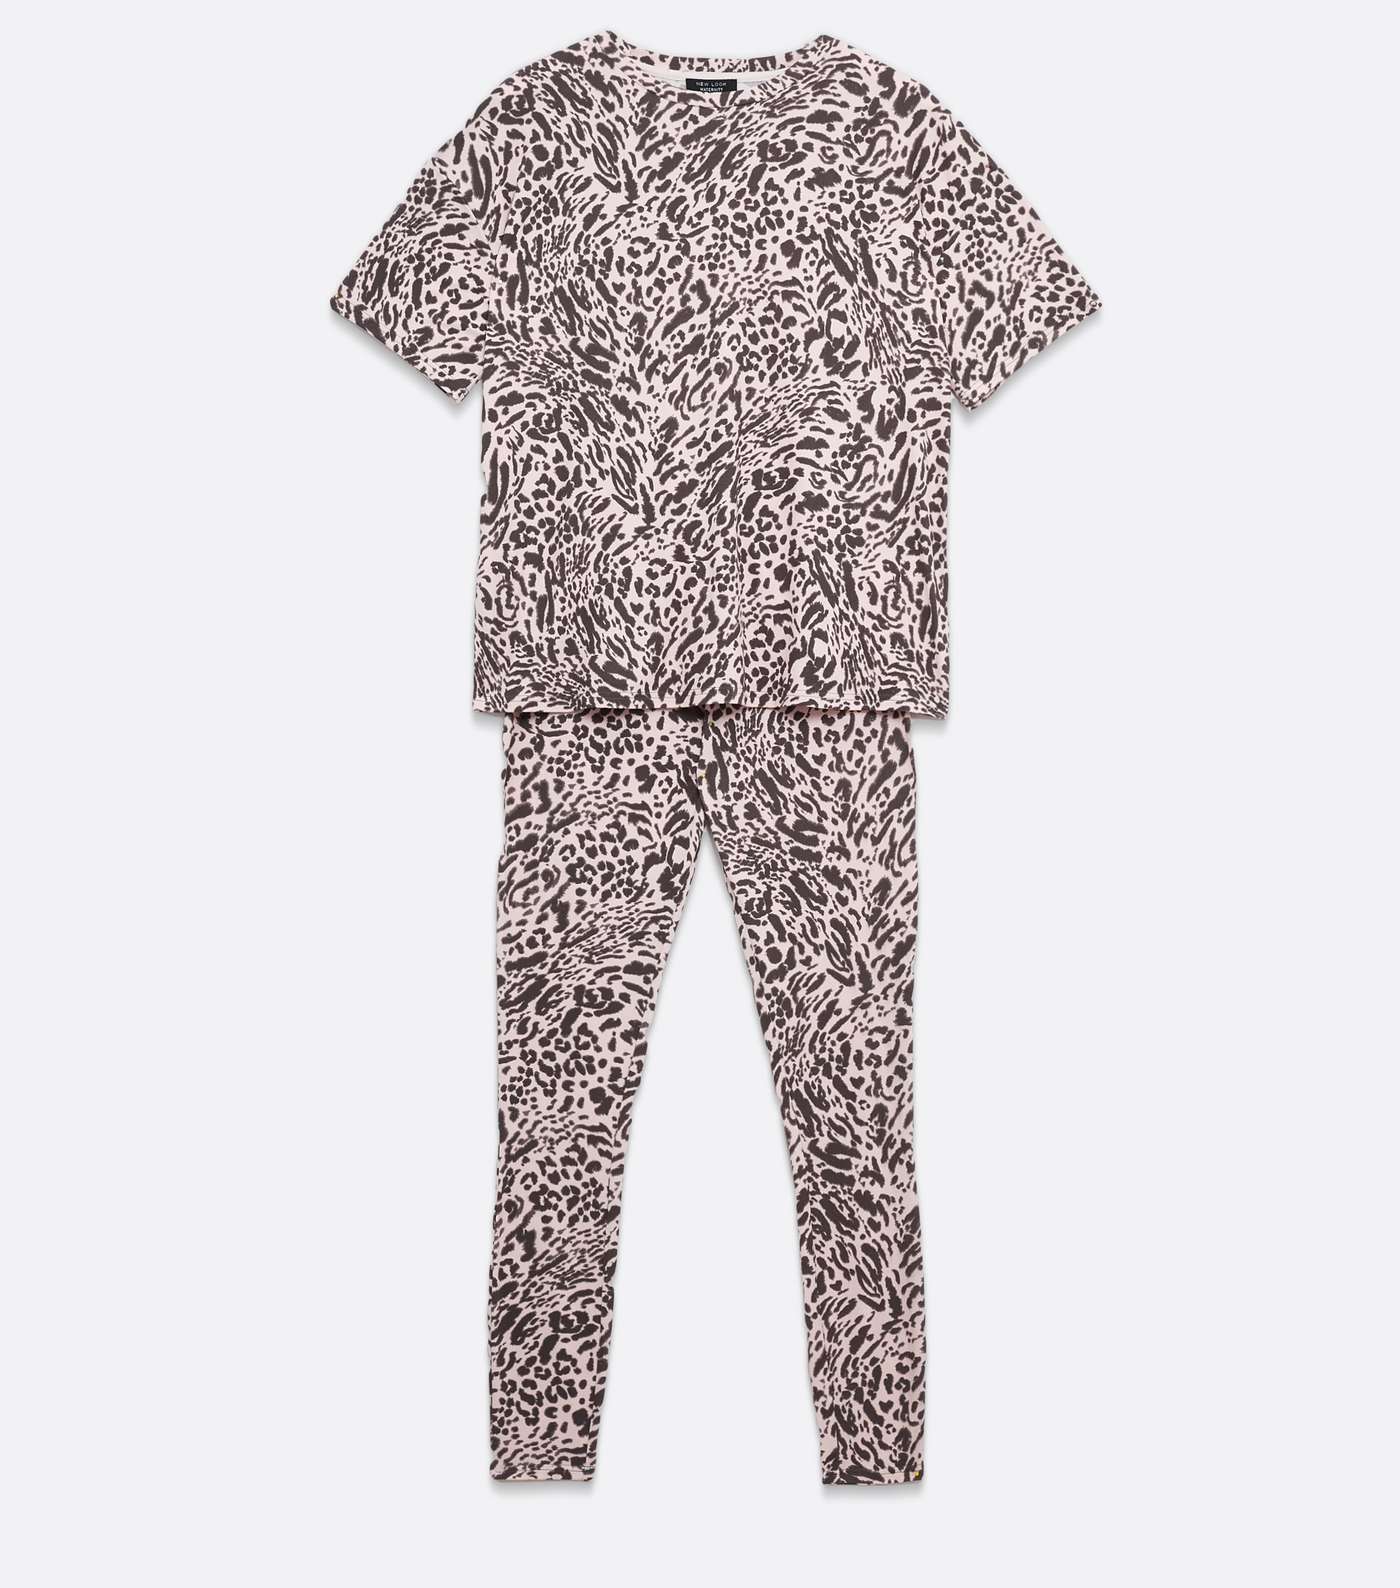 Maternity Pink Soft Touch Legging Pyjama Set with Animal Print Image 5